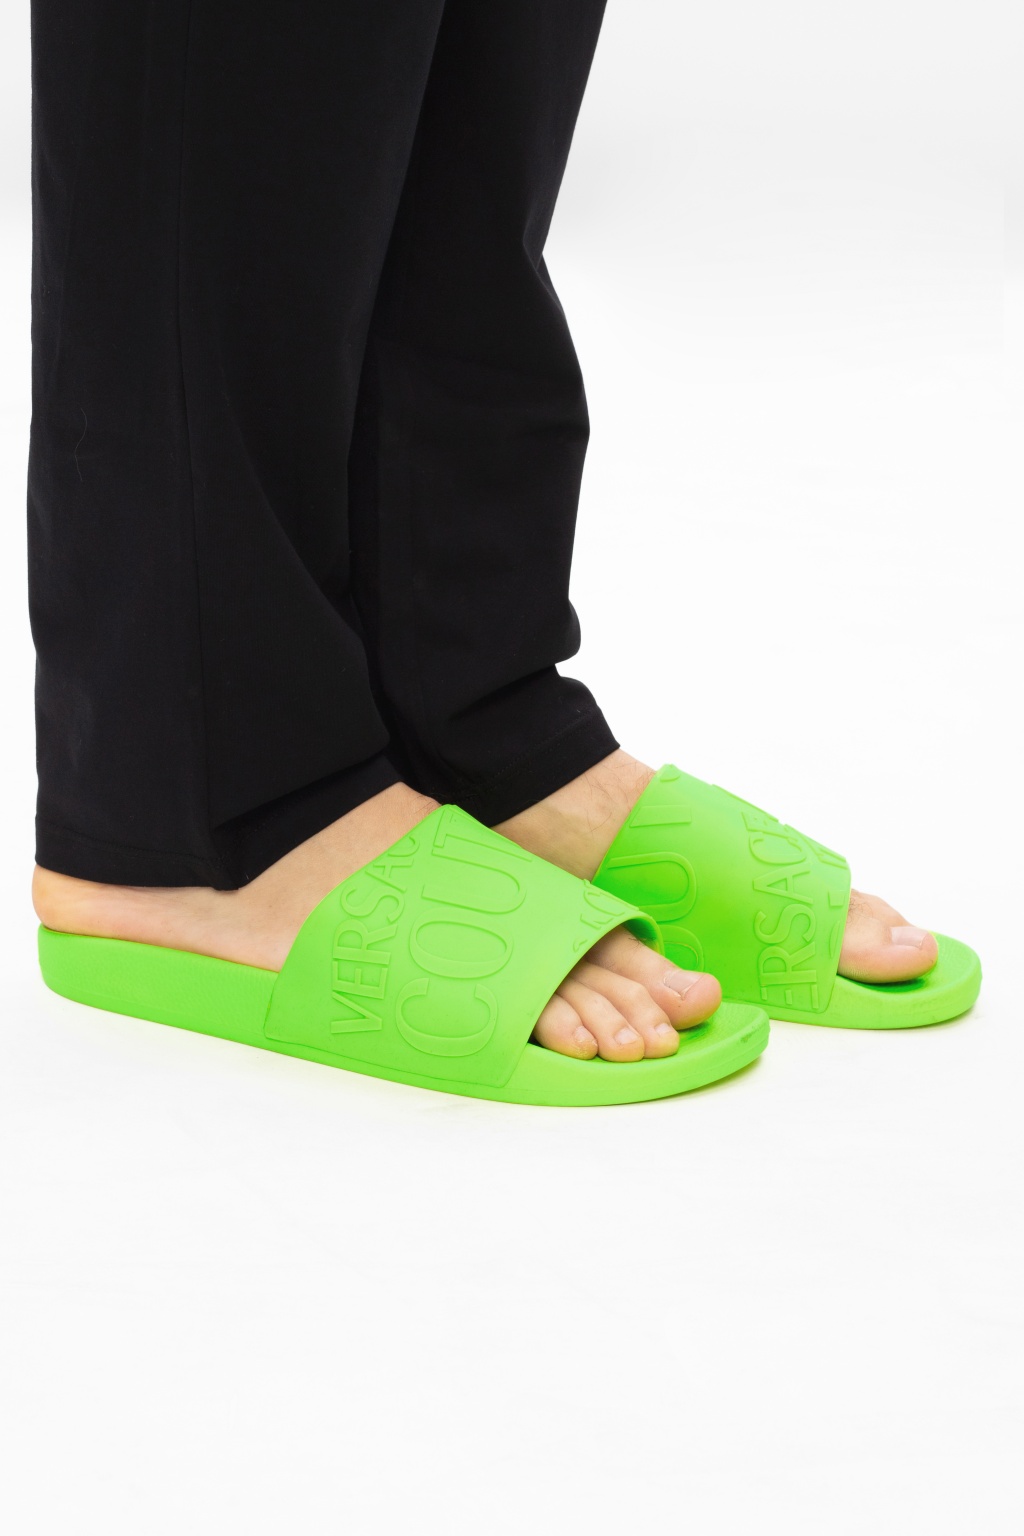 versace green slides